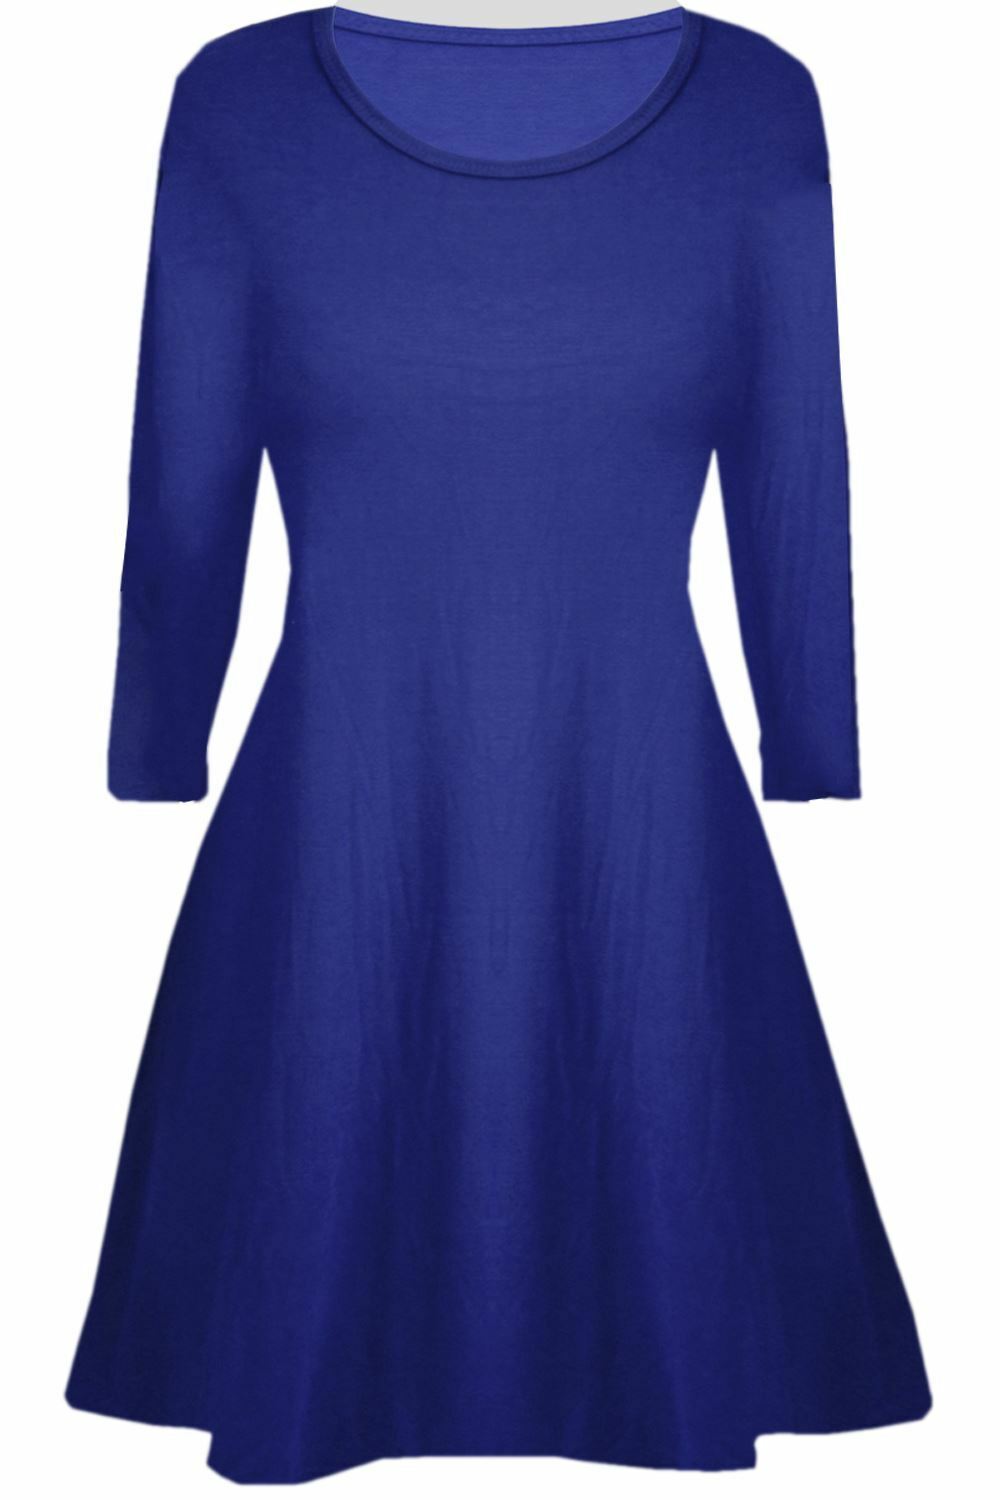 Children's Long Sleeve Royal Blue Skater Dress Age 5 To 13, 100% Polyester